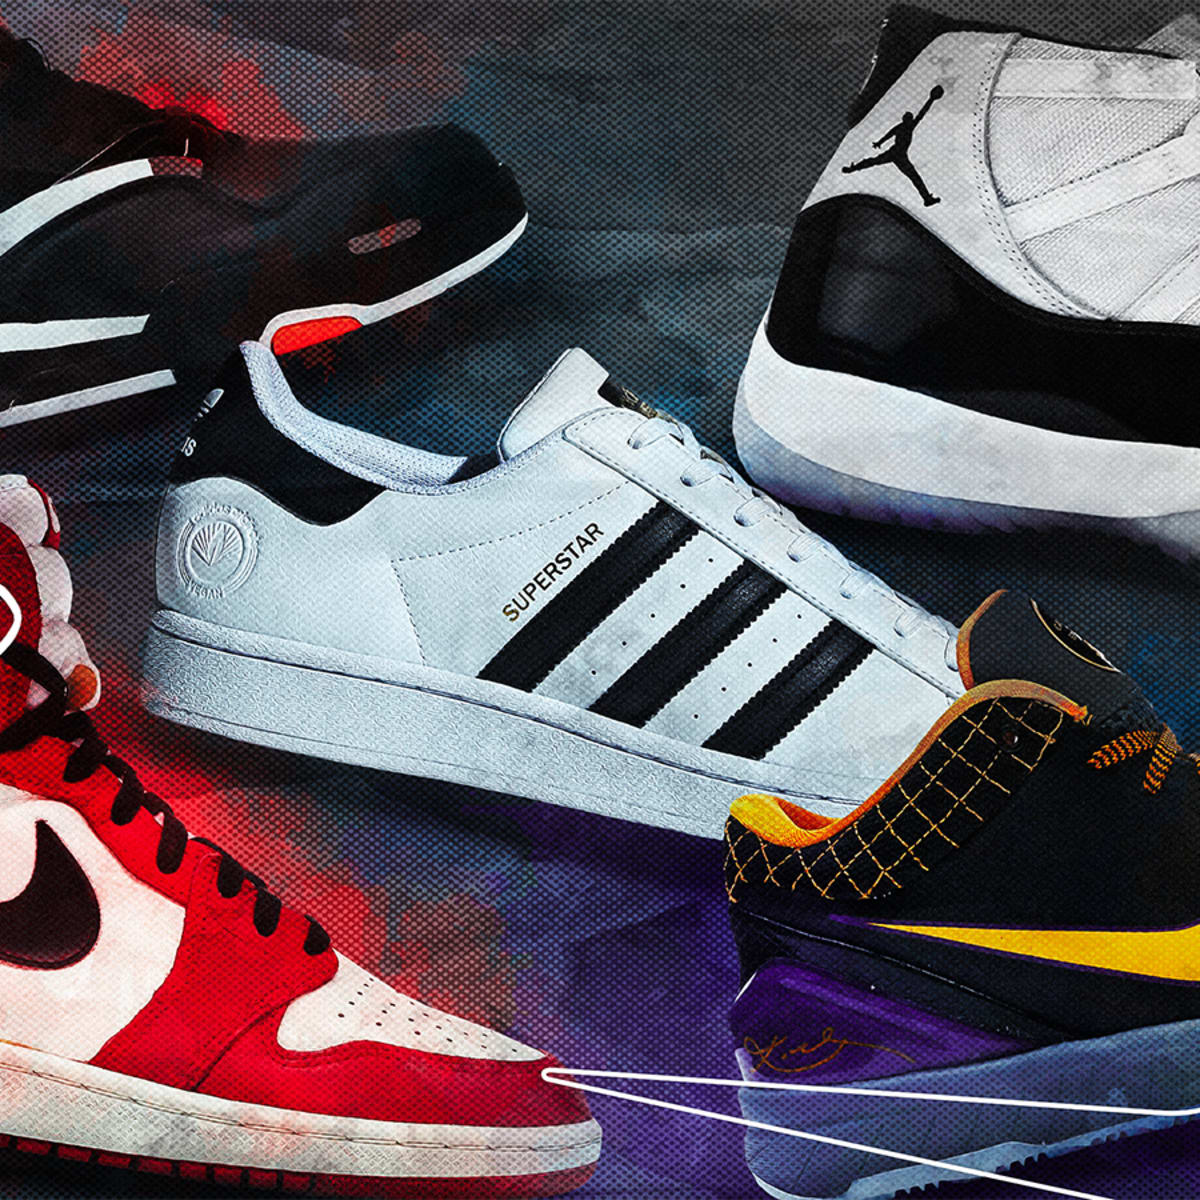 8 All-Star Sneakers From Michael Jordan's Space Jam - Sneaker Freaker